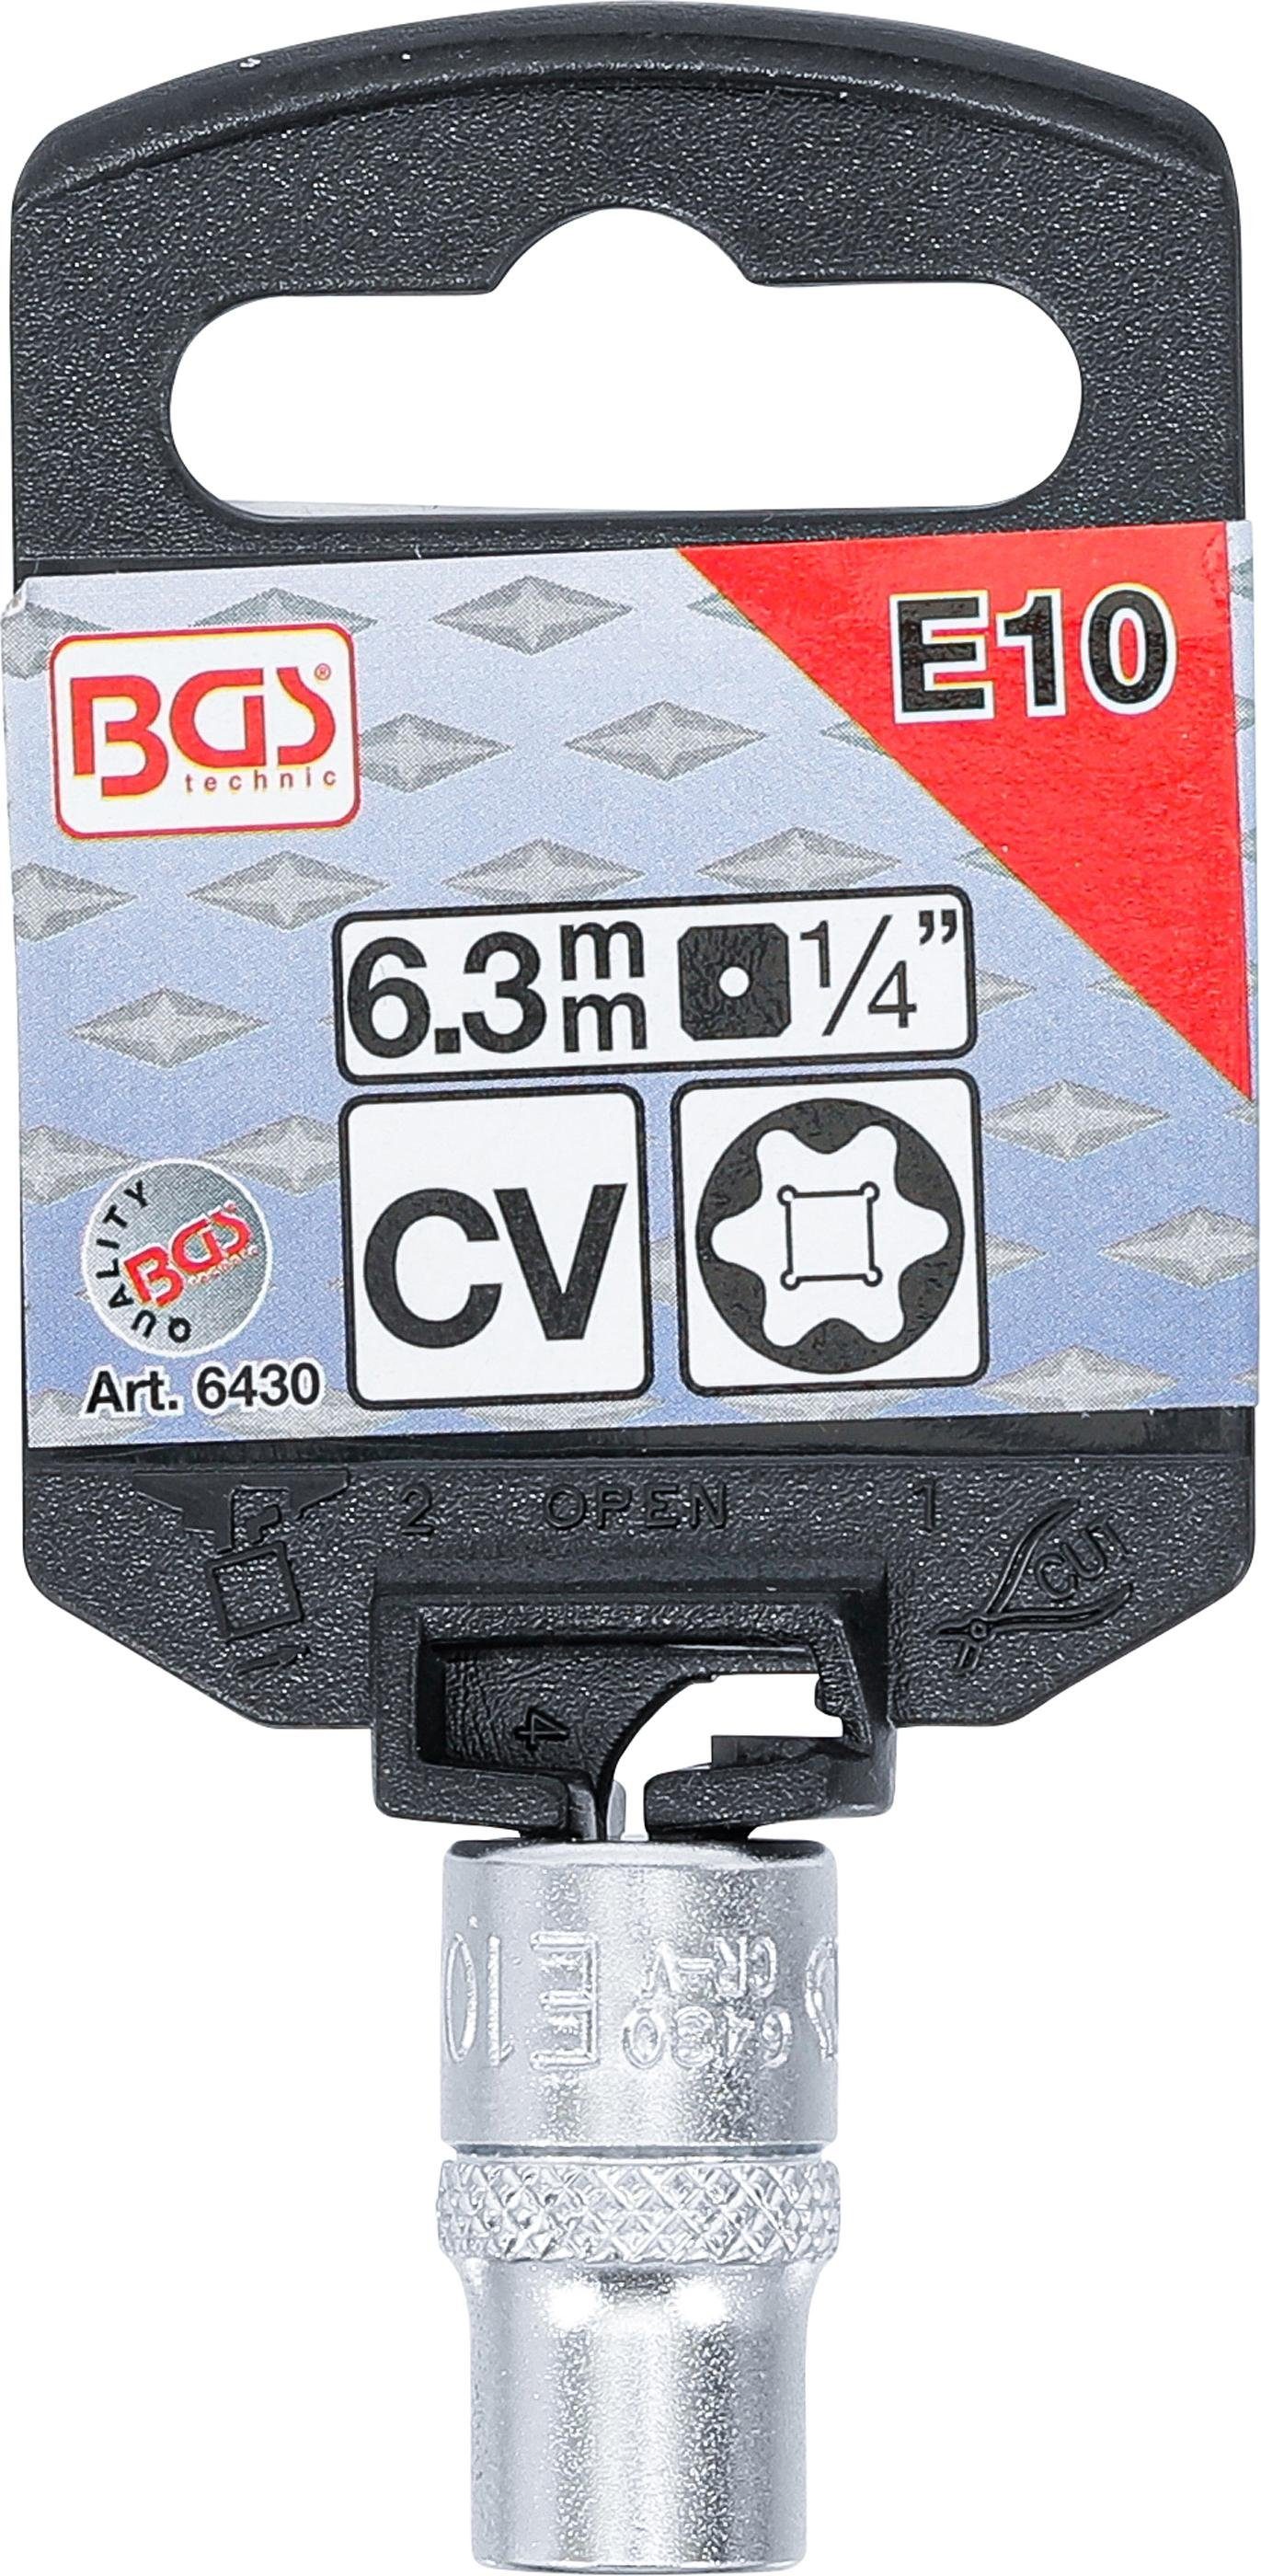 BGS technic Steckschlüssel Steckschlüssel-Einsatz SW Innenvierkant E-Profil, (1/4), mm E10 Antrieb 6,3